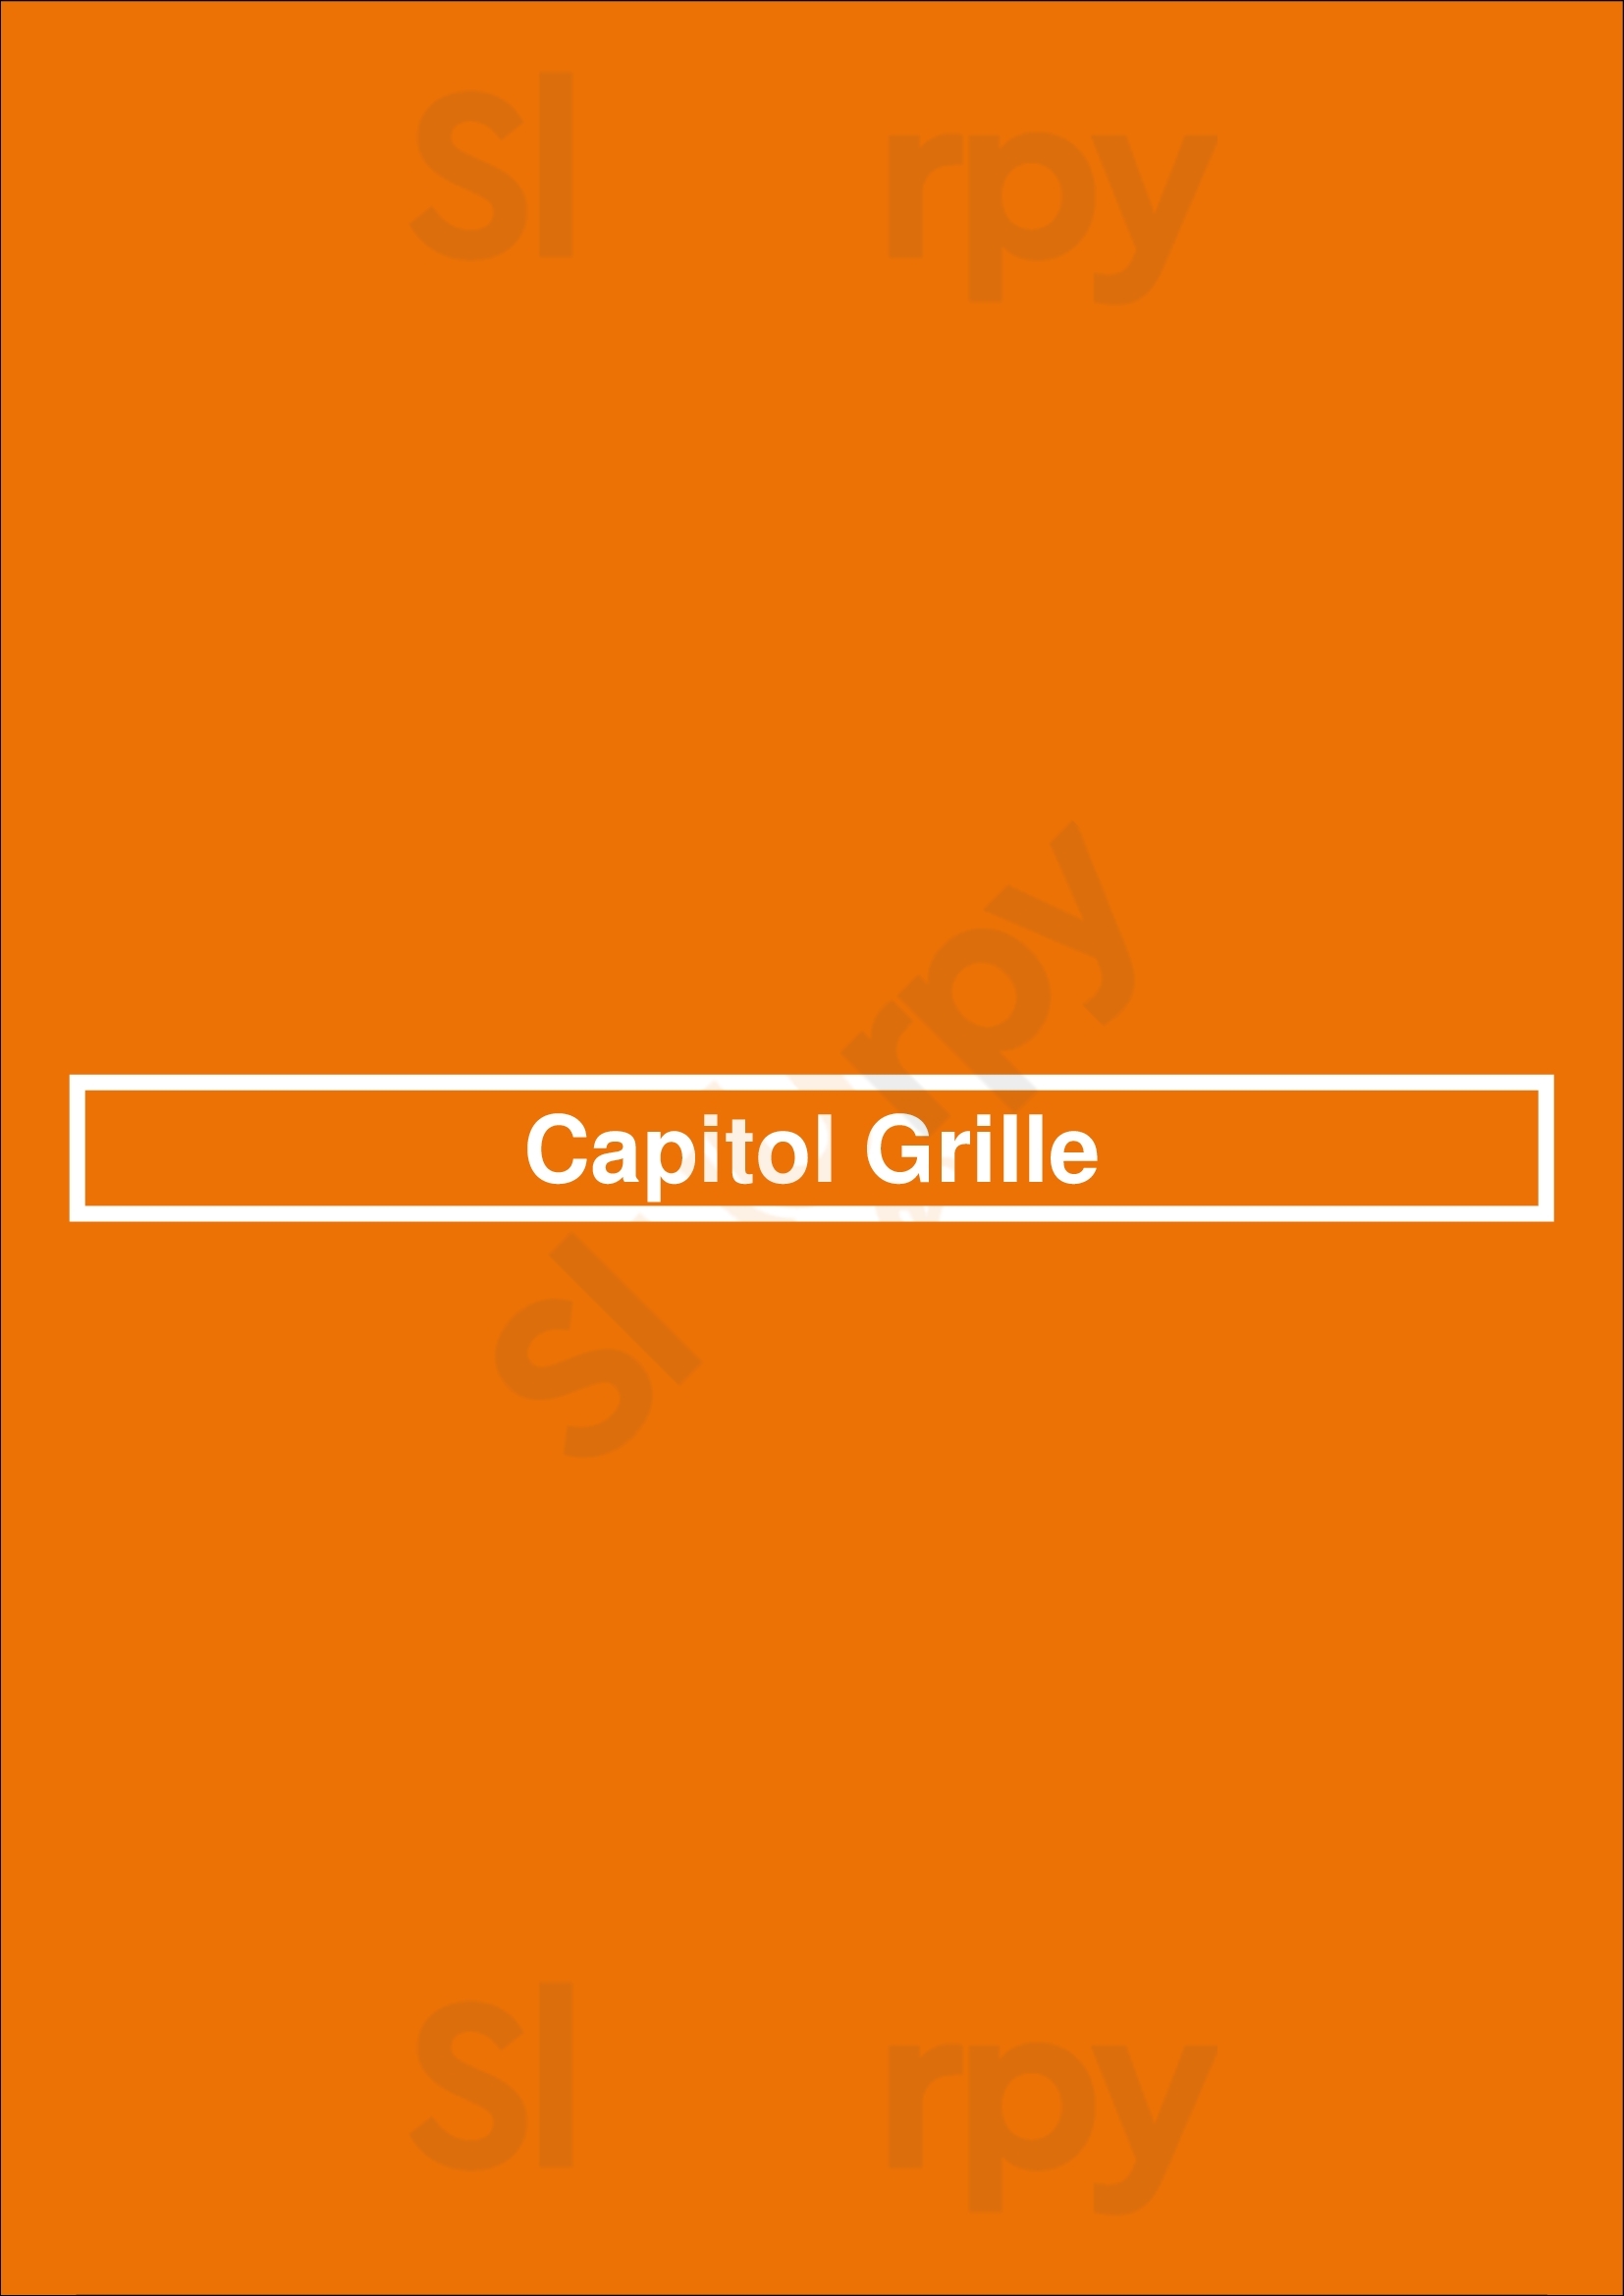 Capitol Grille Nashville Menu - 1